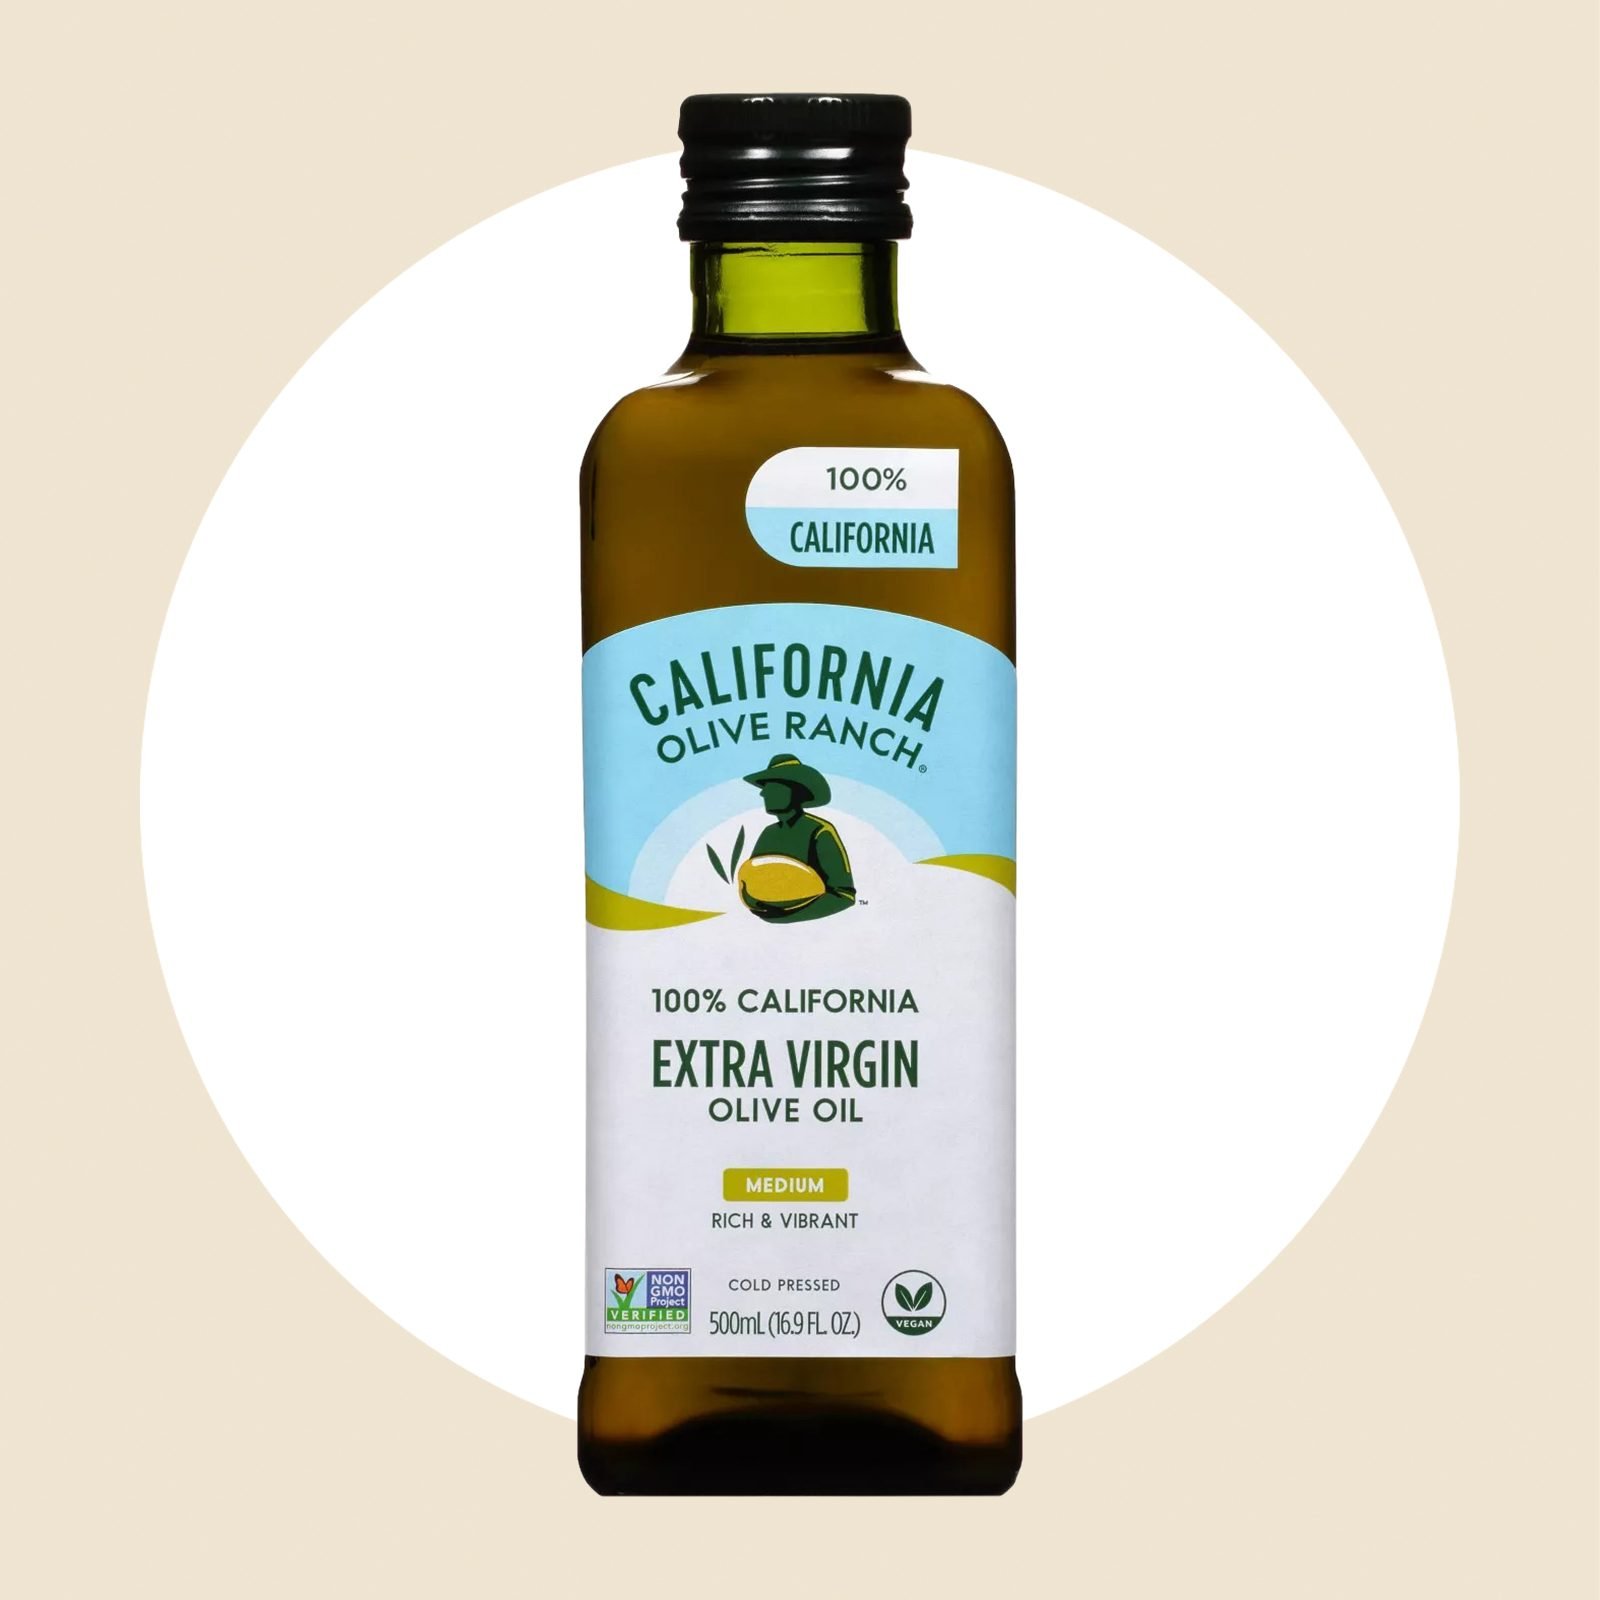 California Olive Ranch Extra Virgin Olive Oil Ecomm Via Target.com